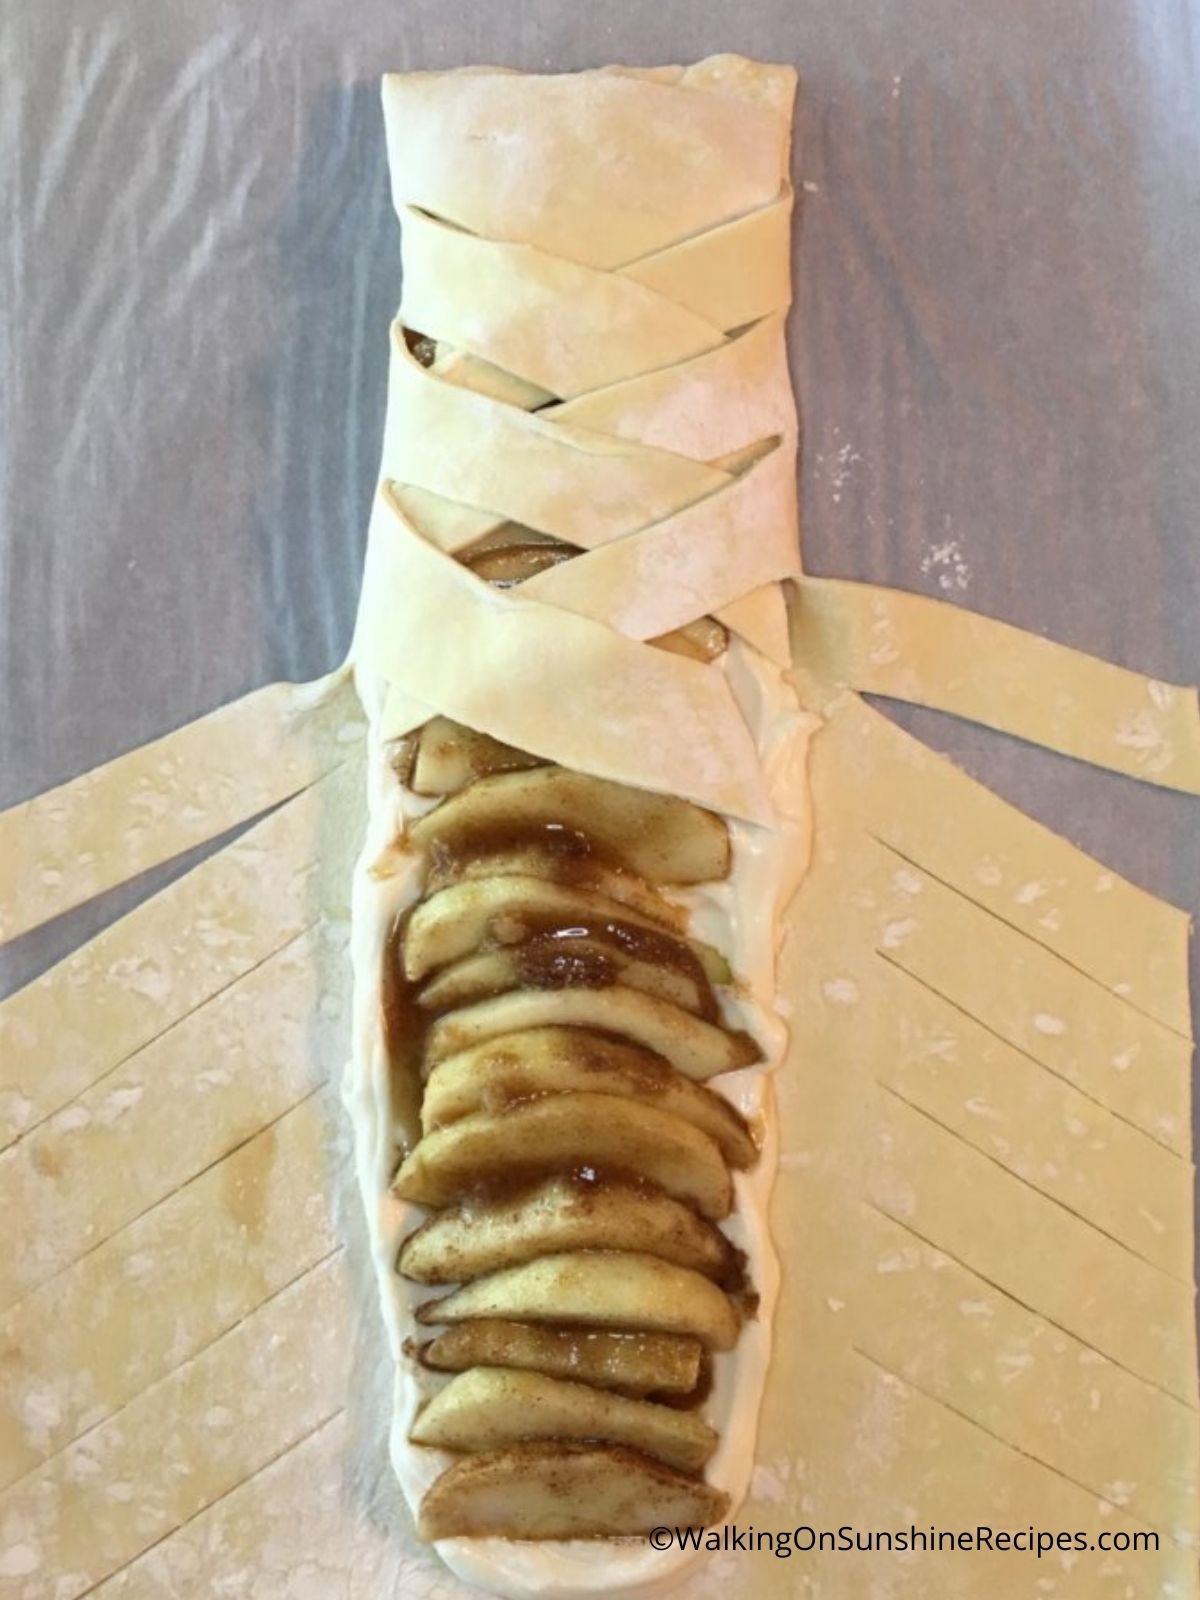 Wrap puff pastry around apple slices.